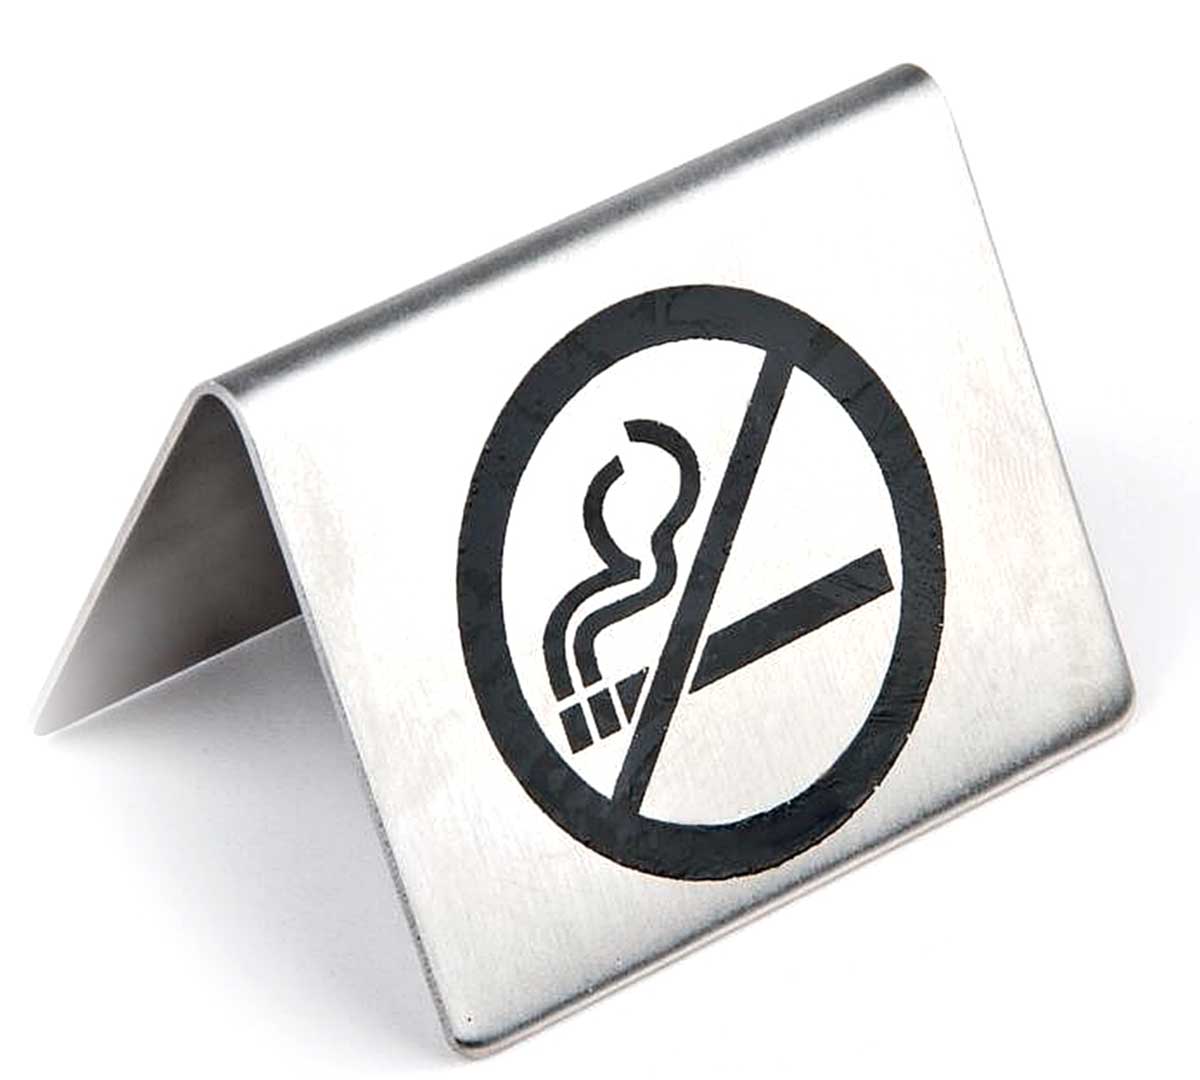 Rótulo de Prohibición - Prohibido Fumar